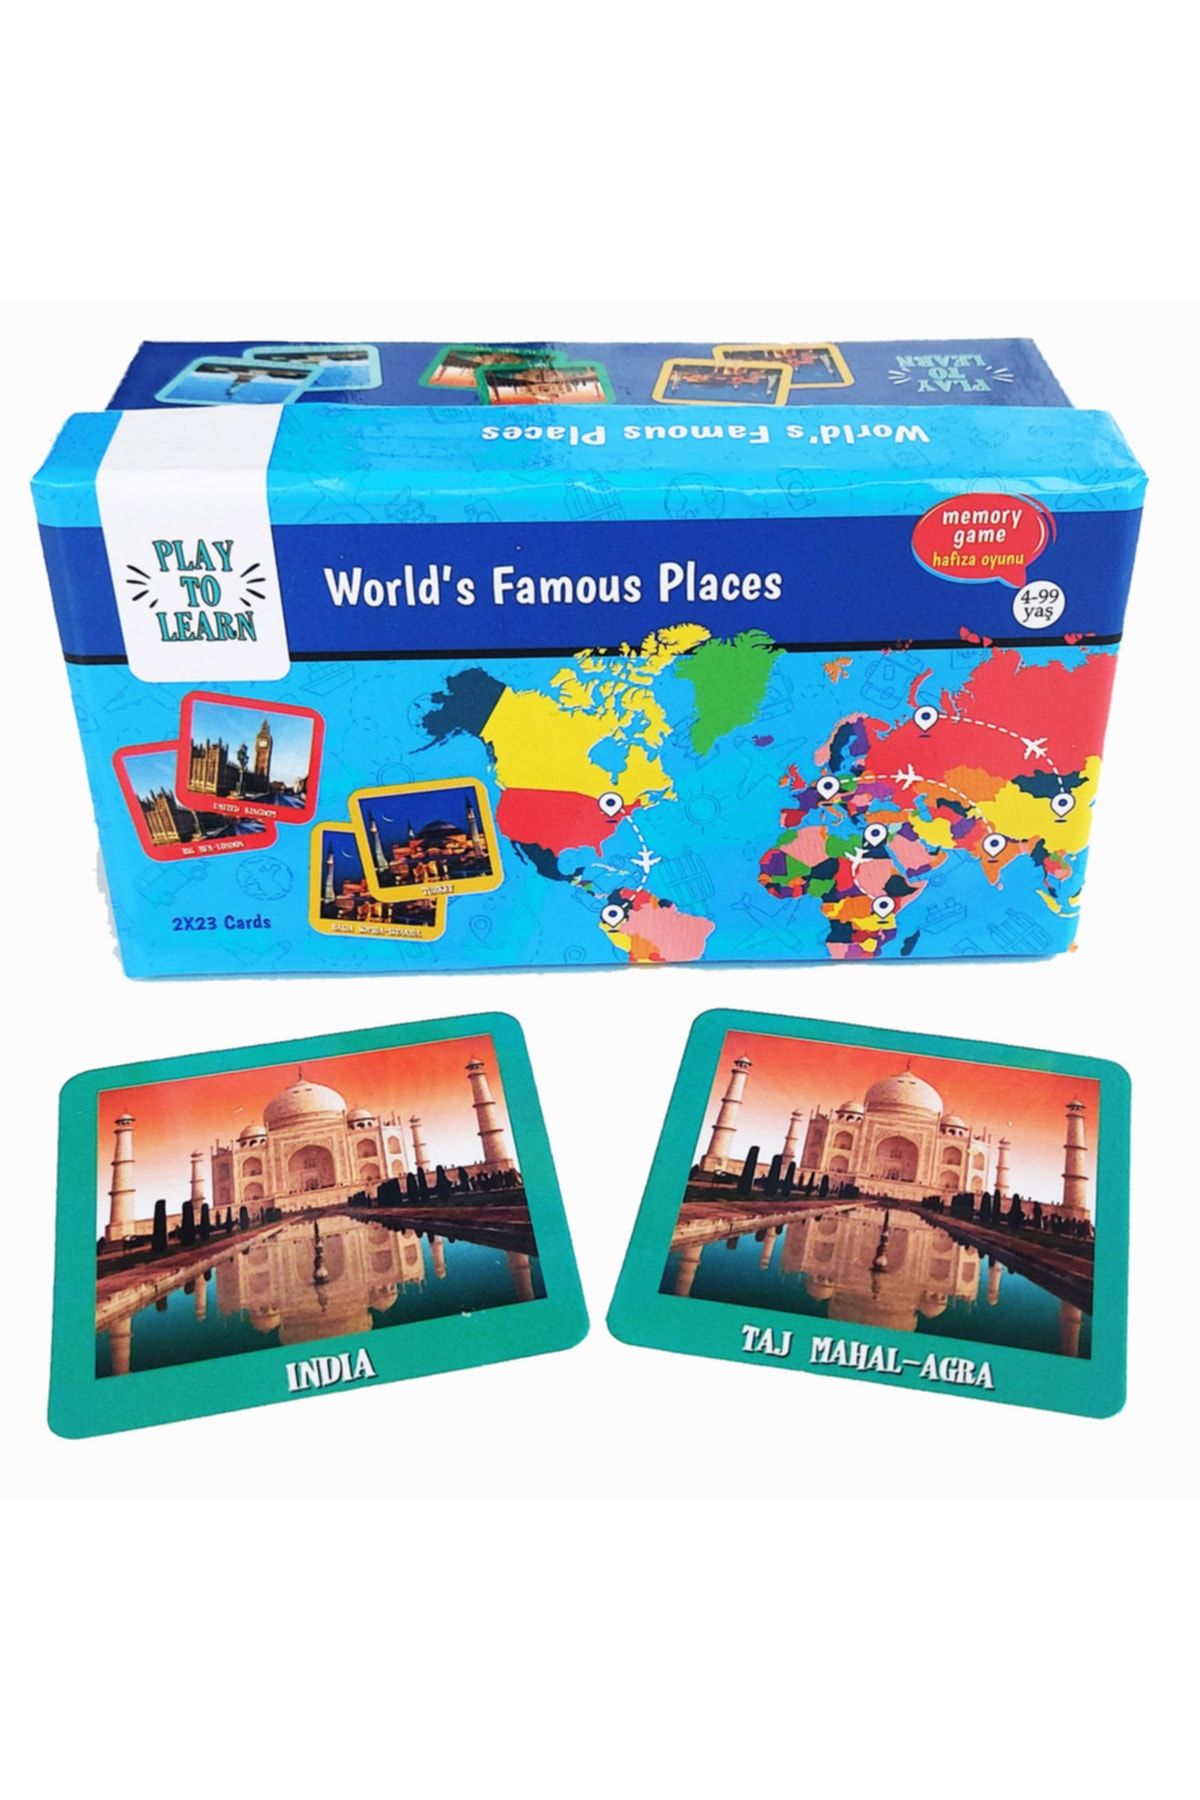 Play to Learn World's Famous Places - Genel Kültür Oyunu, Eğitici Kutu Oyunu, Dikkat Oyunu, Hafiza Oyunu